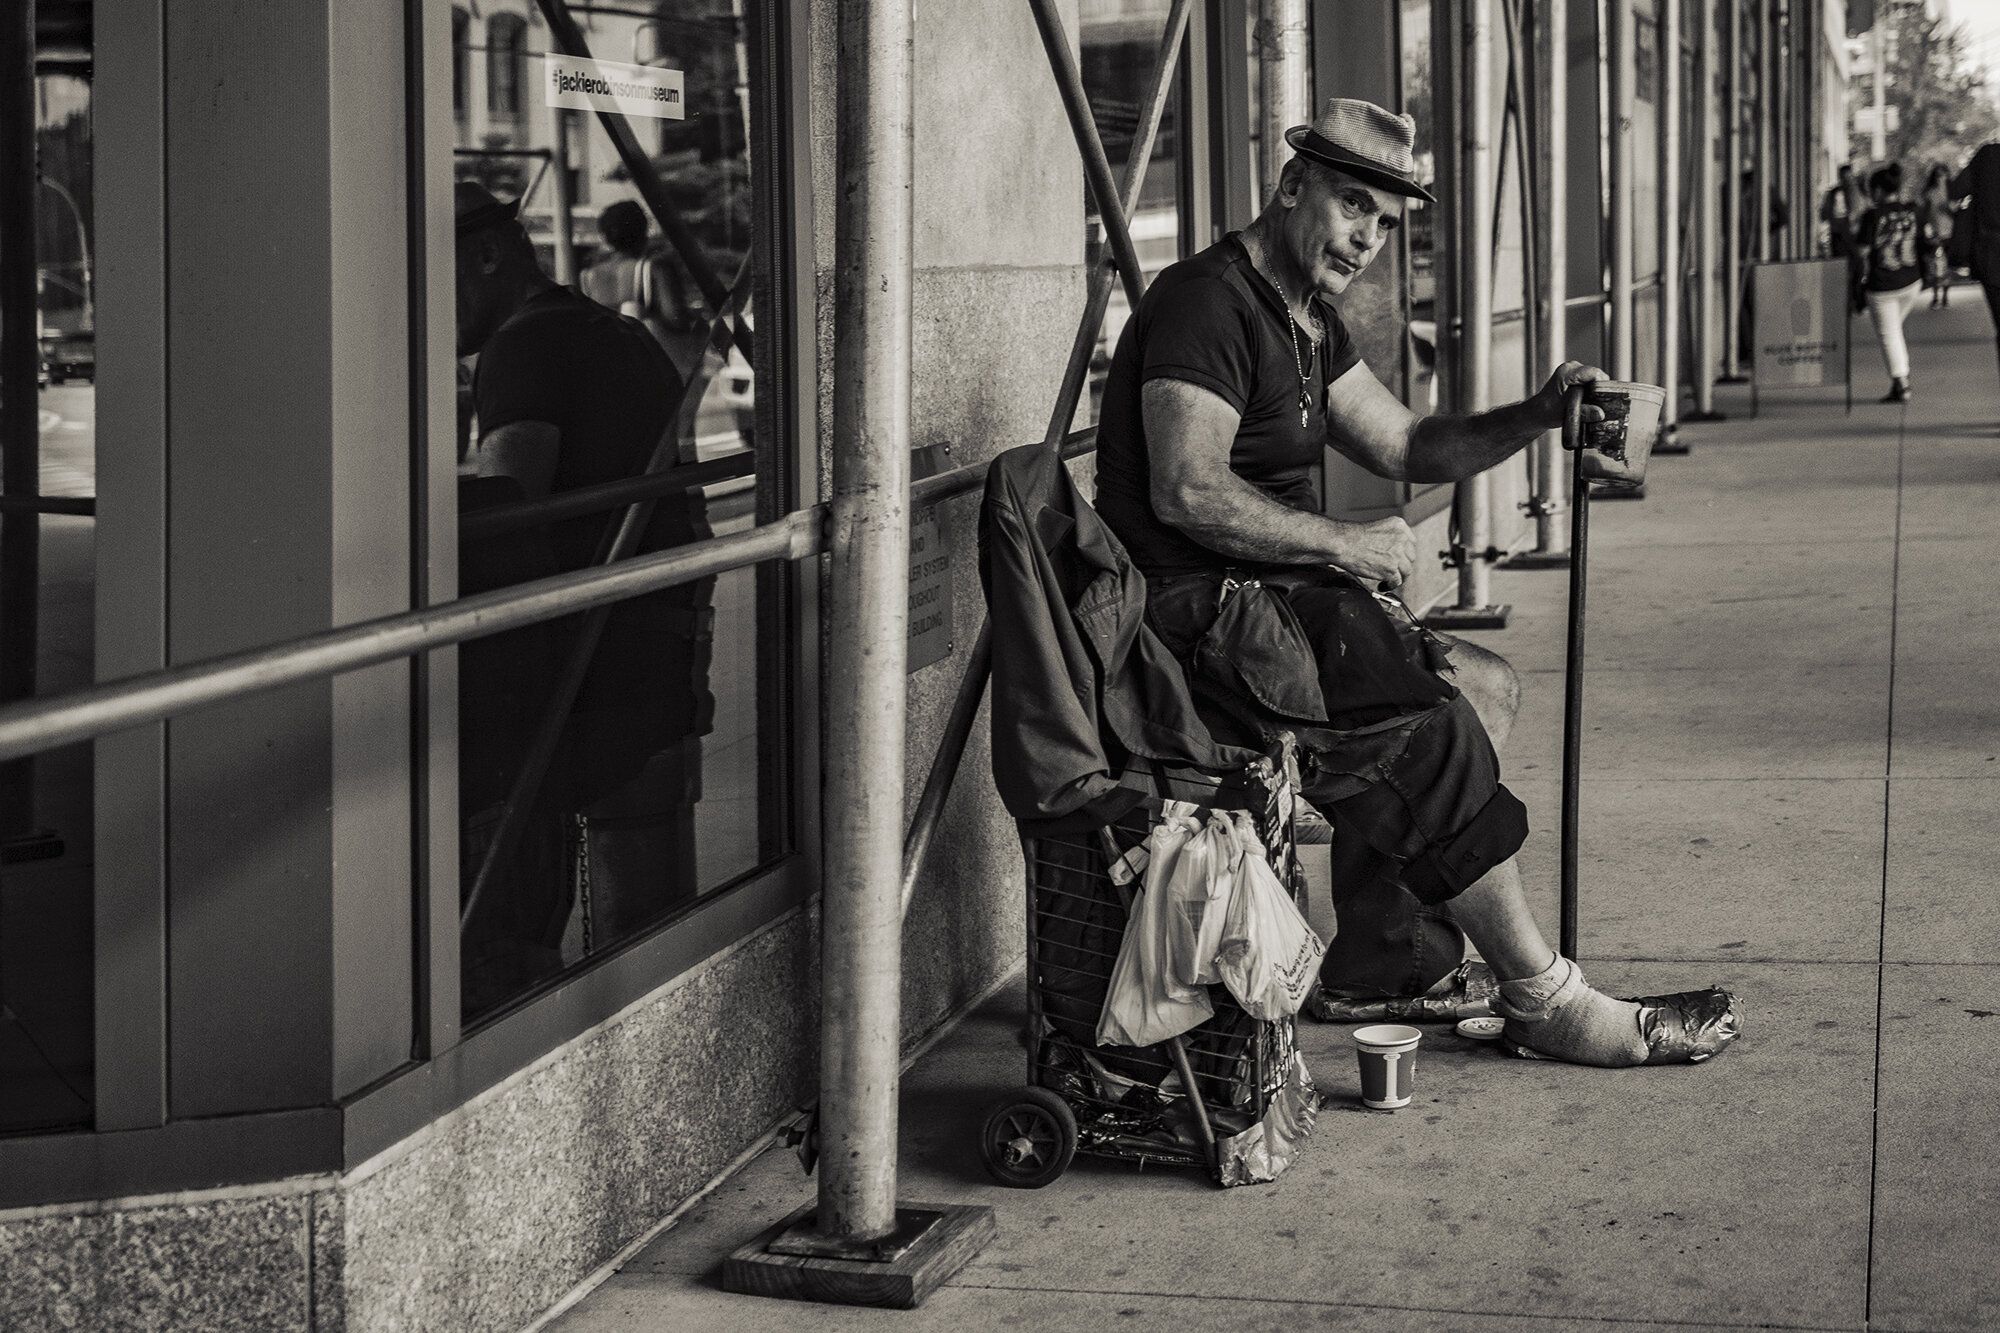 NYC_Street_2019_Hurtfoot_Homeless_Man-001crp.jpg